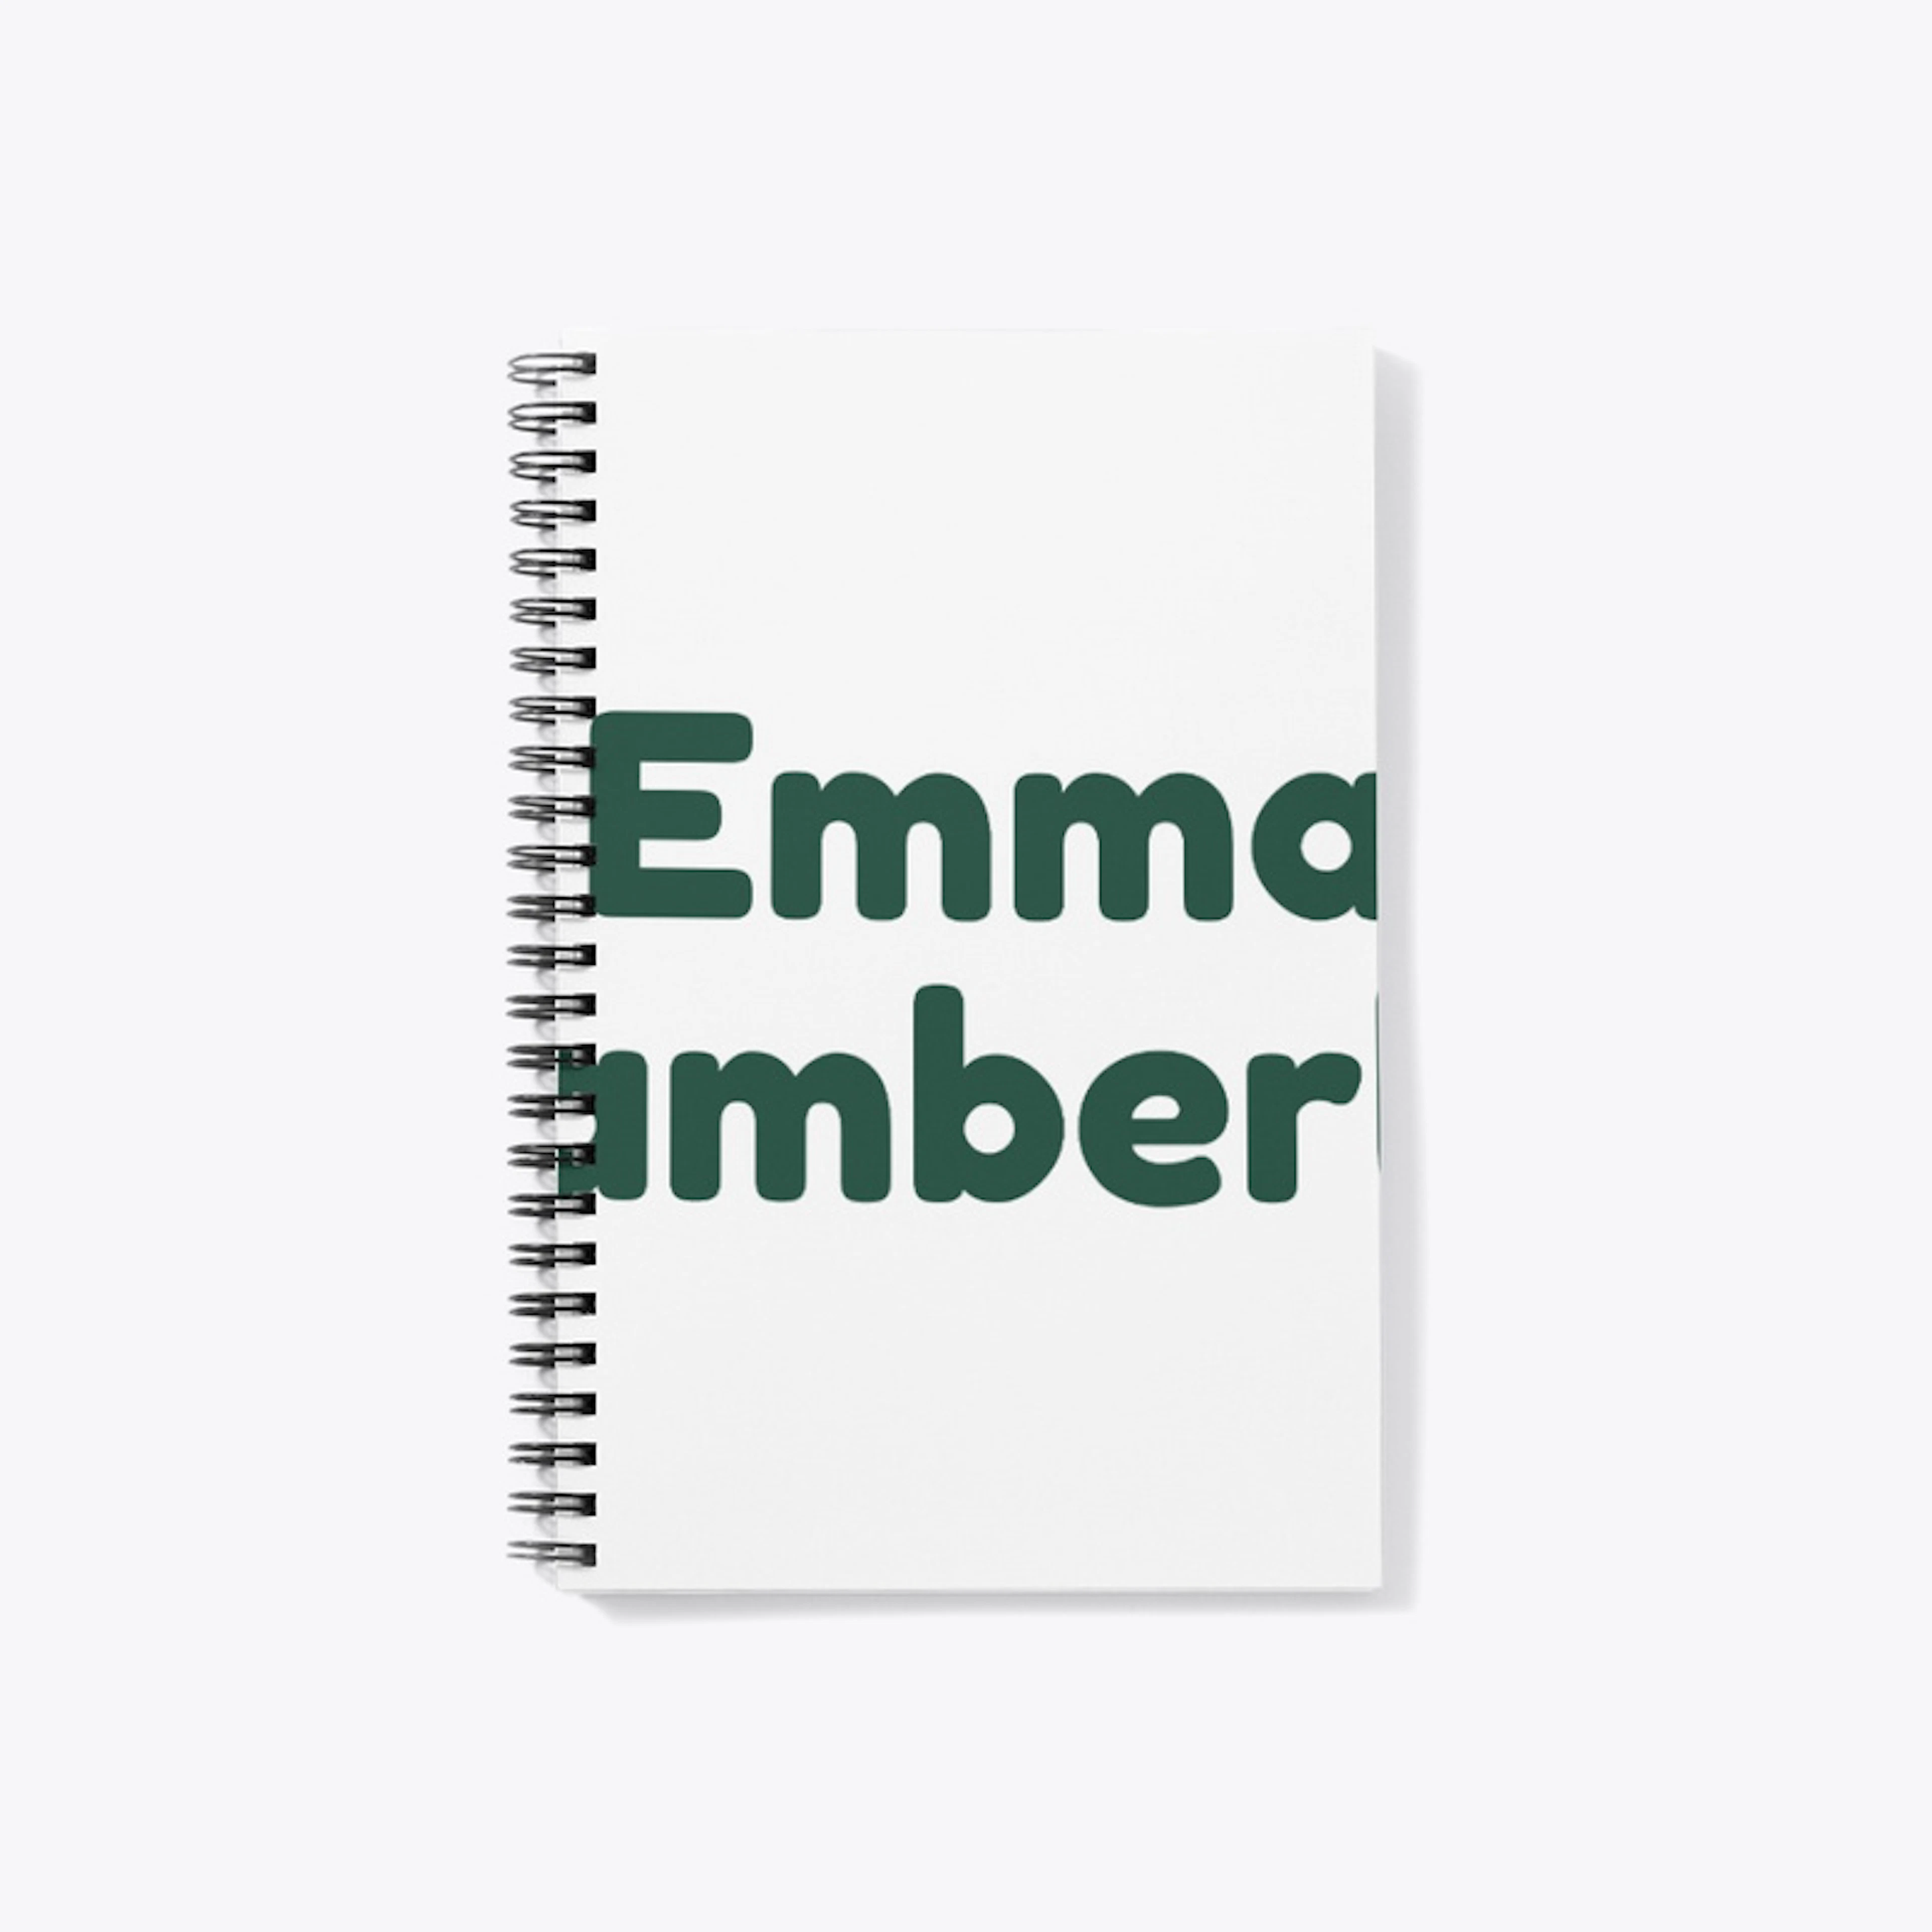 Emma Chamberlain Merch Logo